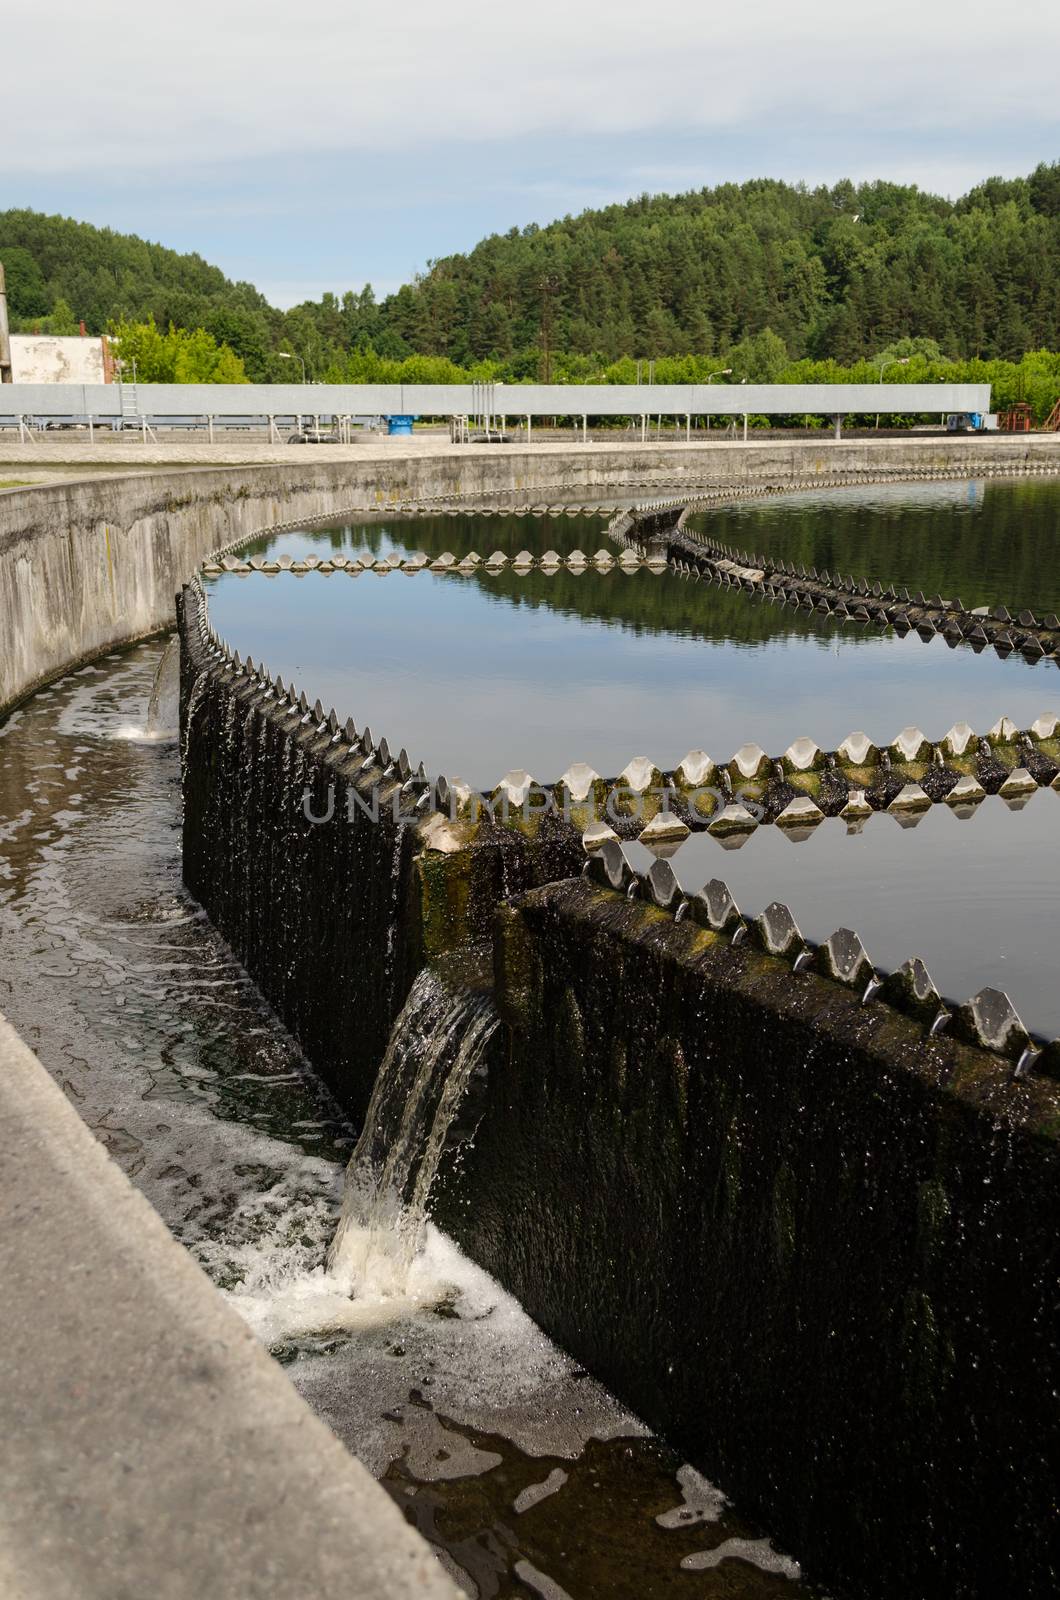 Reservoir of cleaned sewage water clarification step in treatment waterworks. Birds swim.